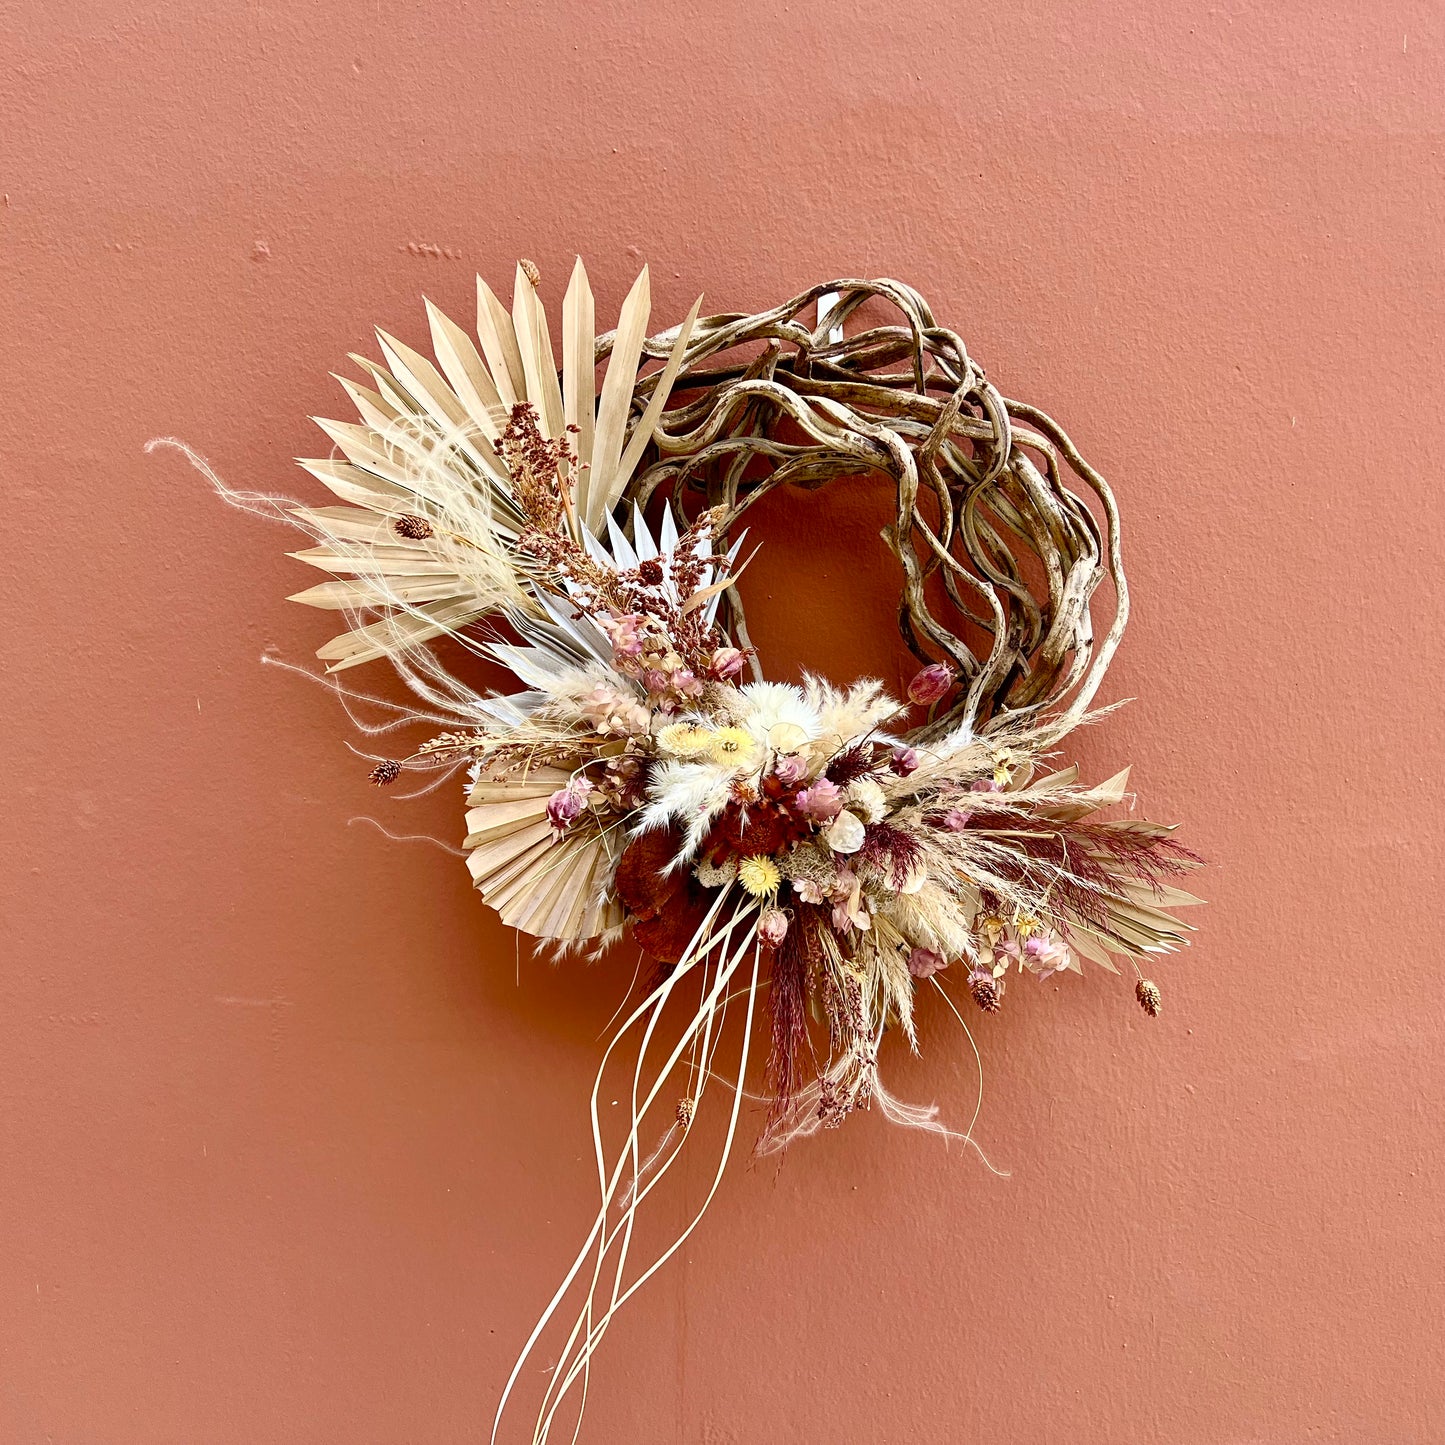 Boho Wreath | Handcrafted Wreath - The English Garden